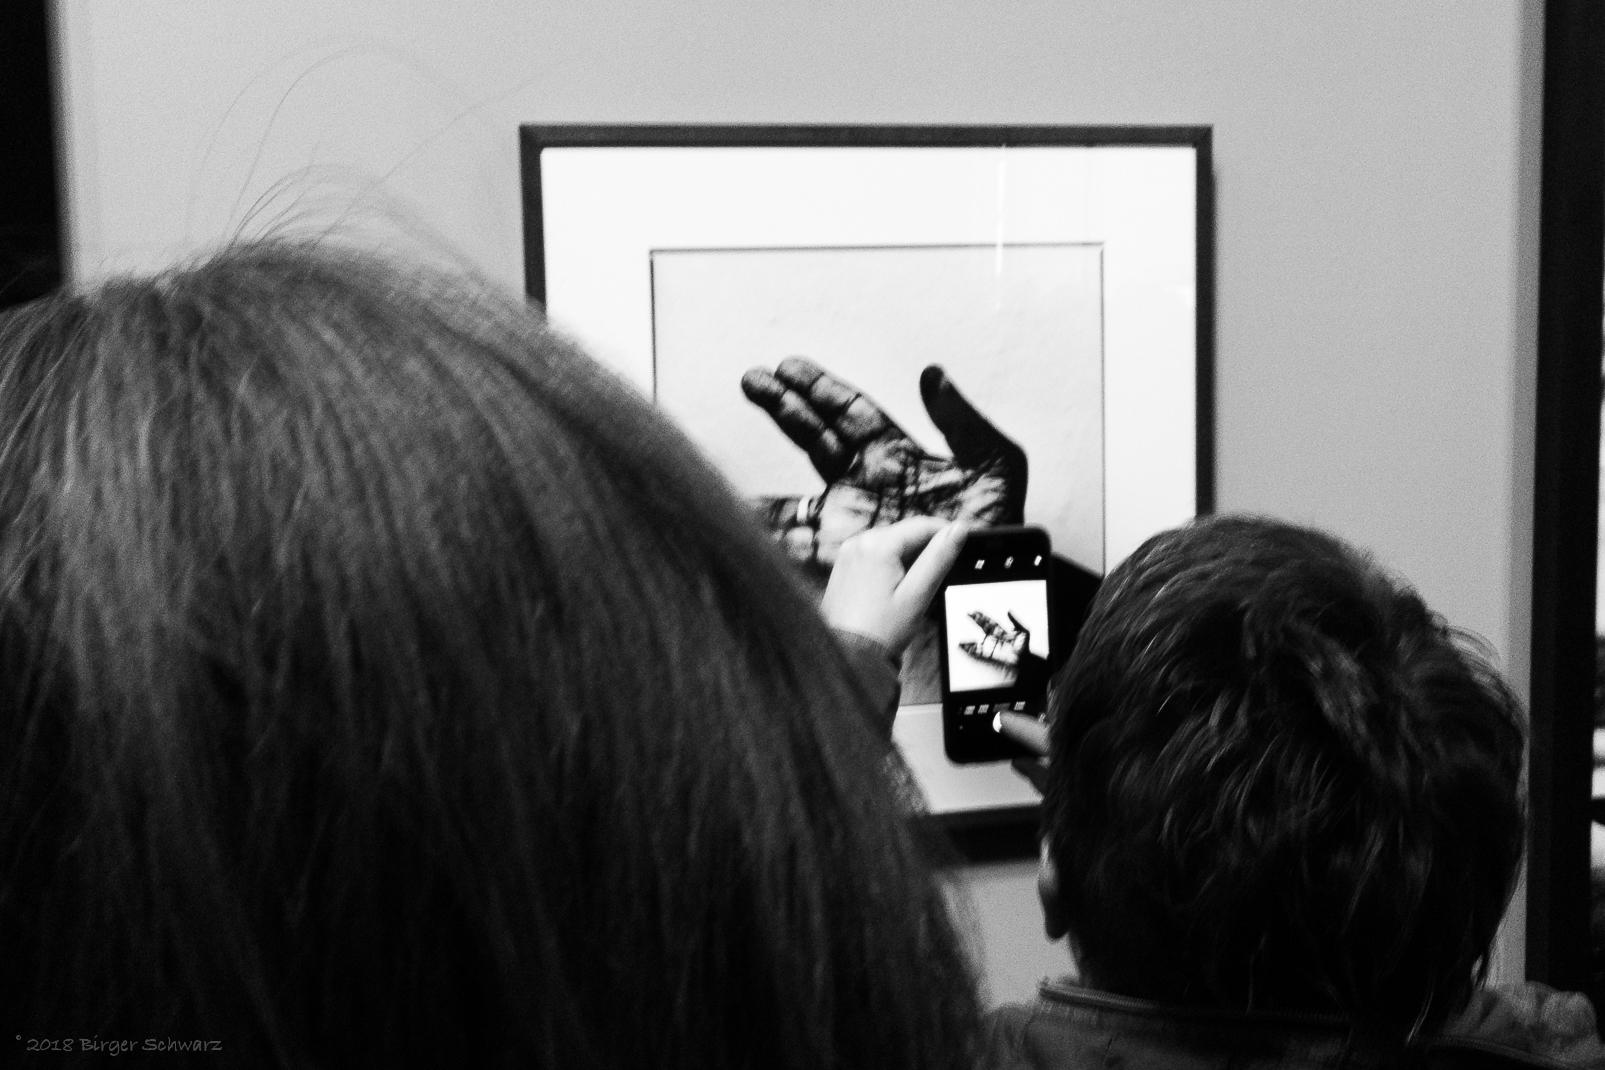 Anton Corbijn  The Living and the Dead - Anton Corbijn, Anton Corbijn  The Living and the Dead, Ausstellung, Bucerius Kunst Forum, Hamburg, Kunst, Künstler, Museum, Veranstaltungen, Augenblick